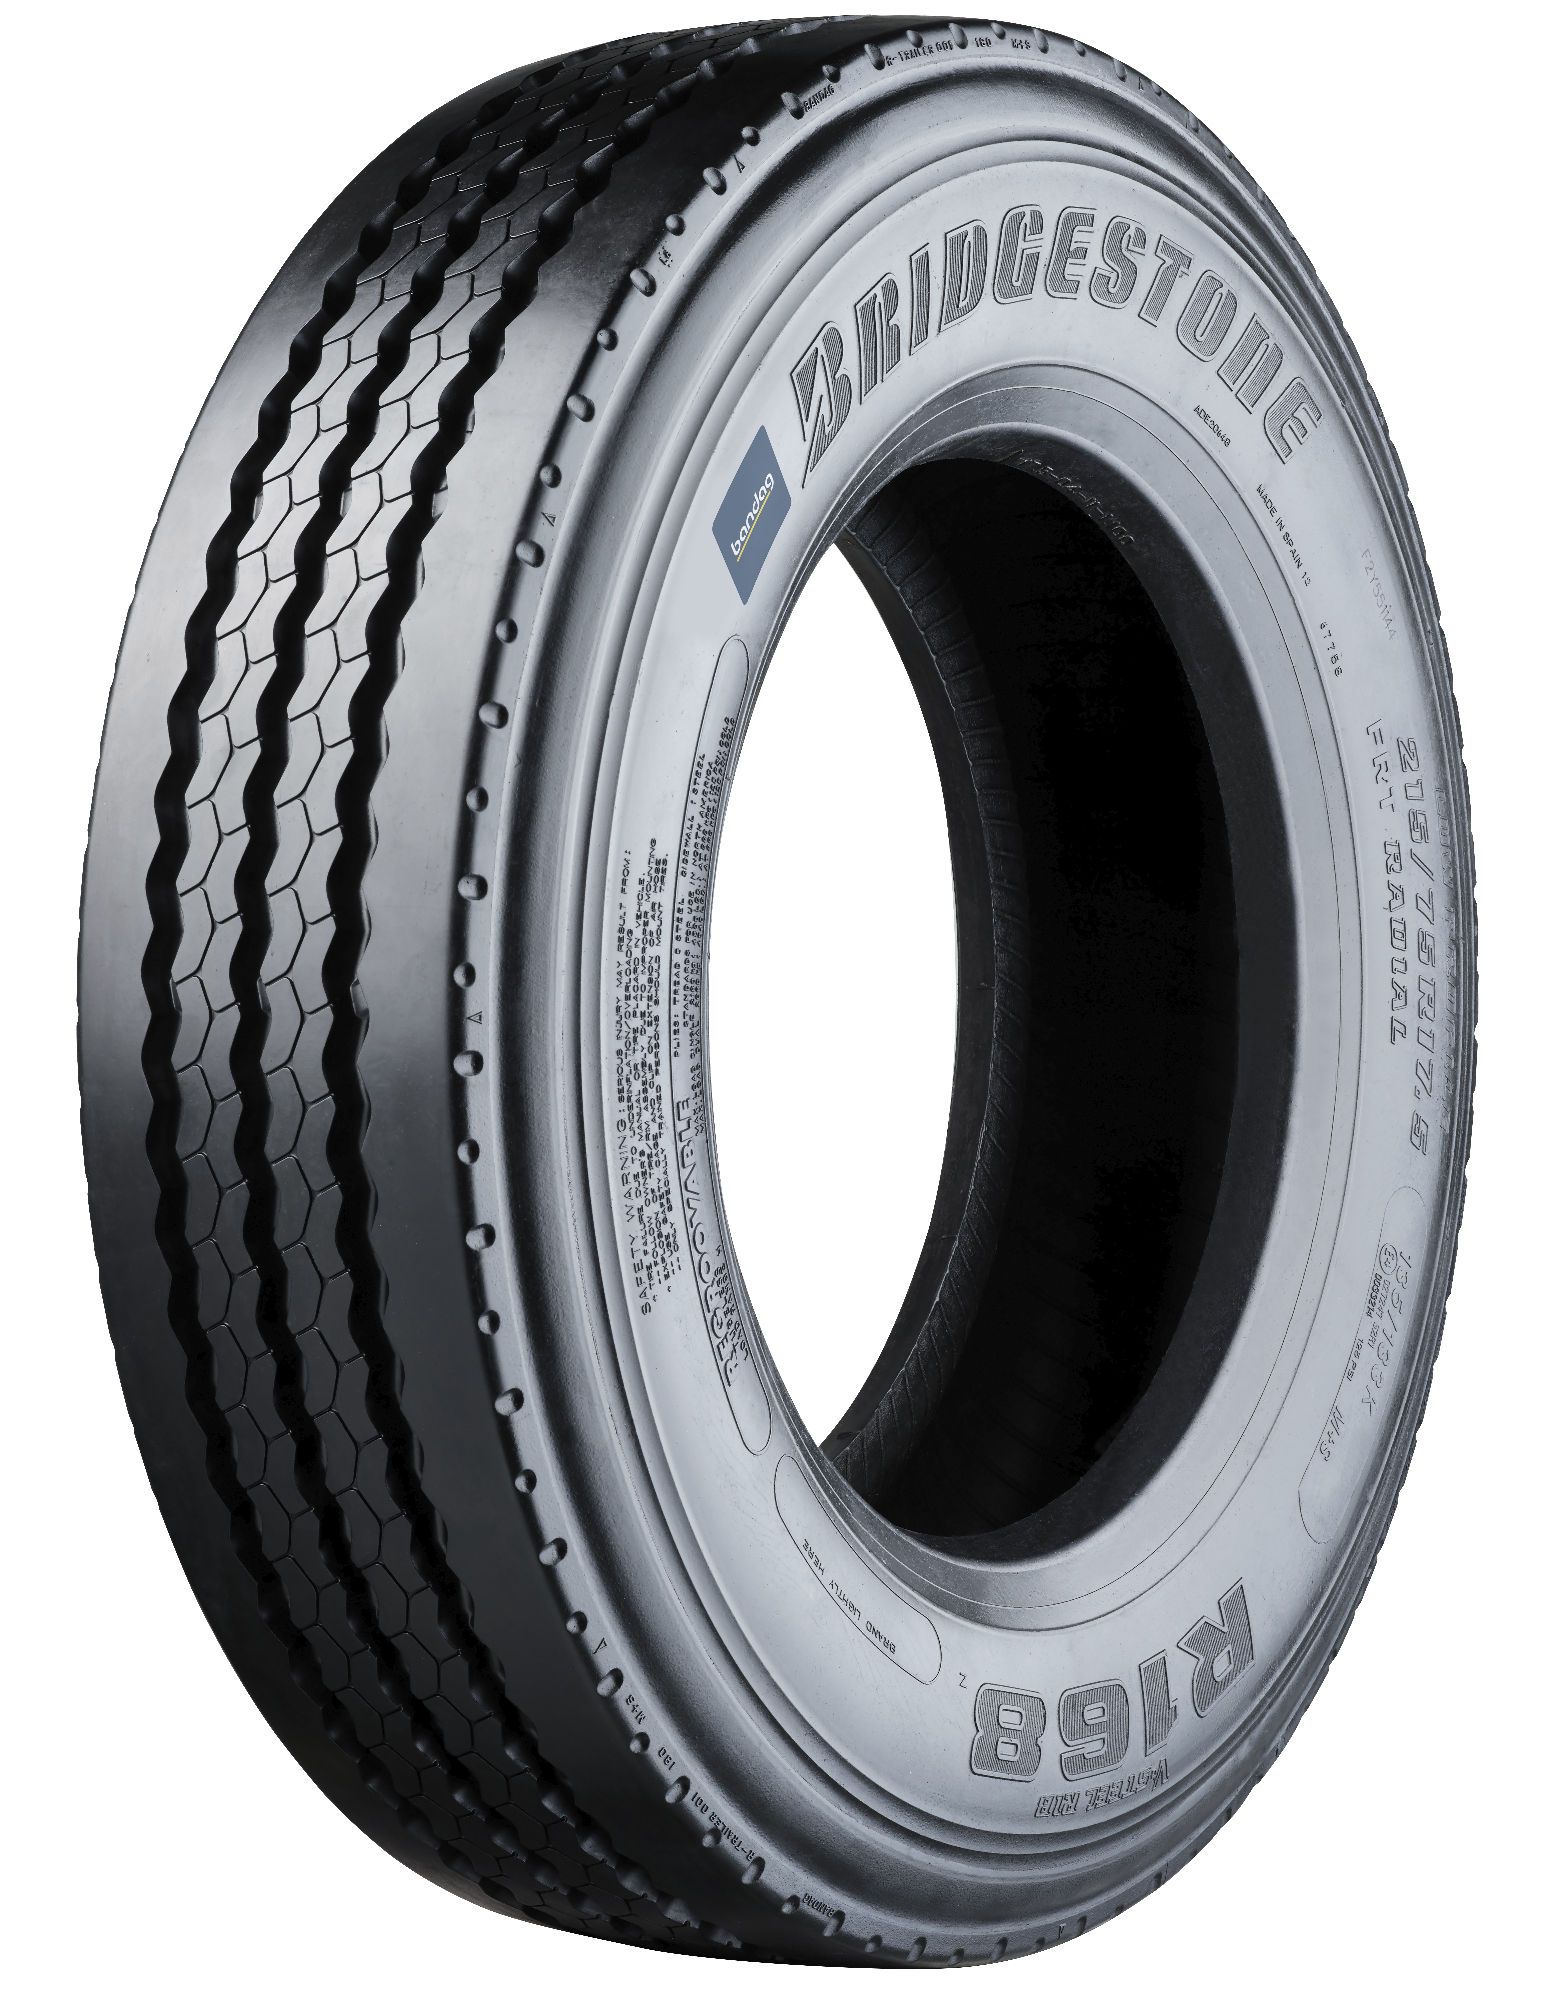 Gomme Nuove Bridgestone 285/70 R19.5 150/148J RT1 M+S (8.00mm) pneumatici nuovi Estivo